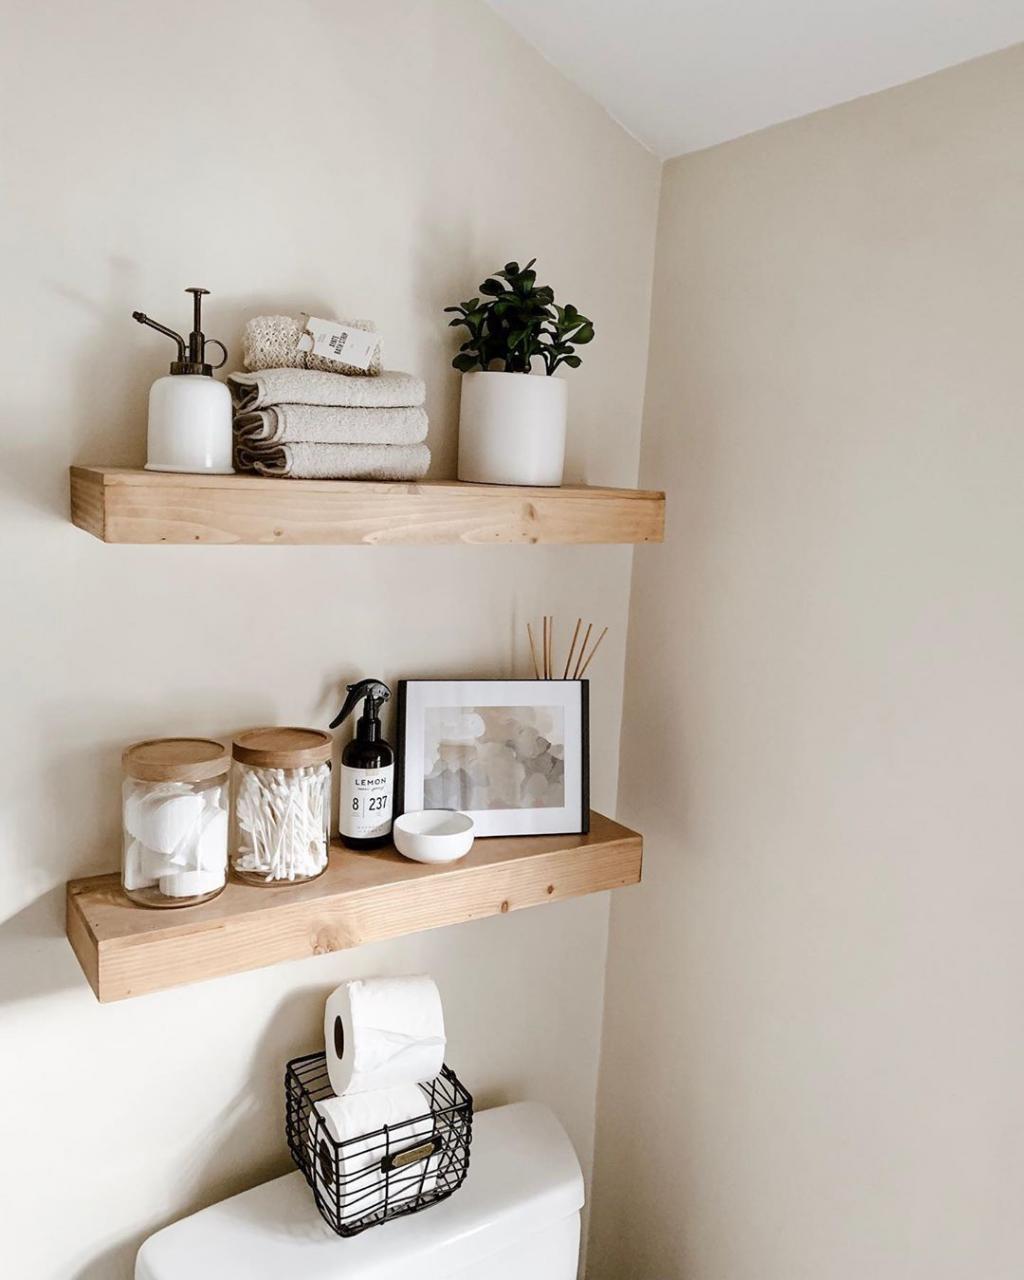 Home Interior Simple in 2020 Floating shelves diy, Floating shelves